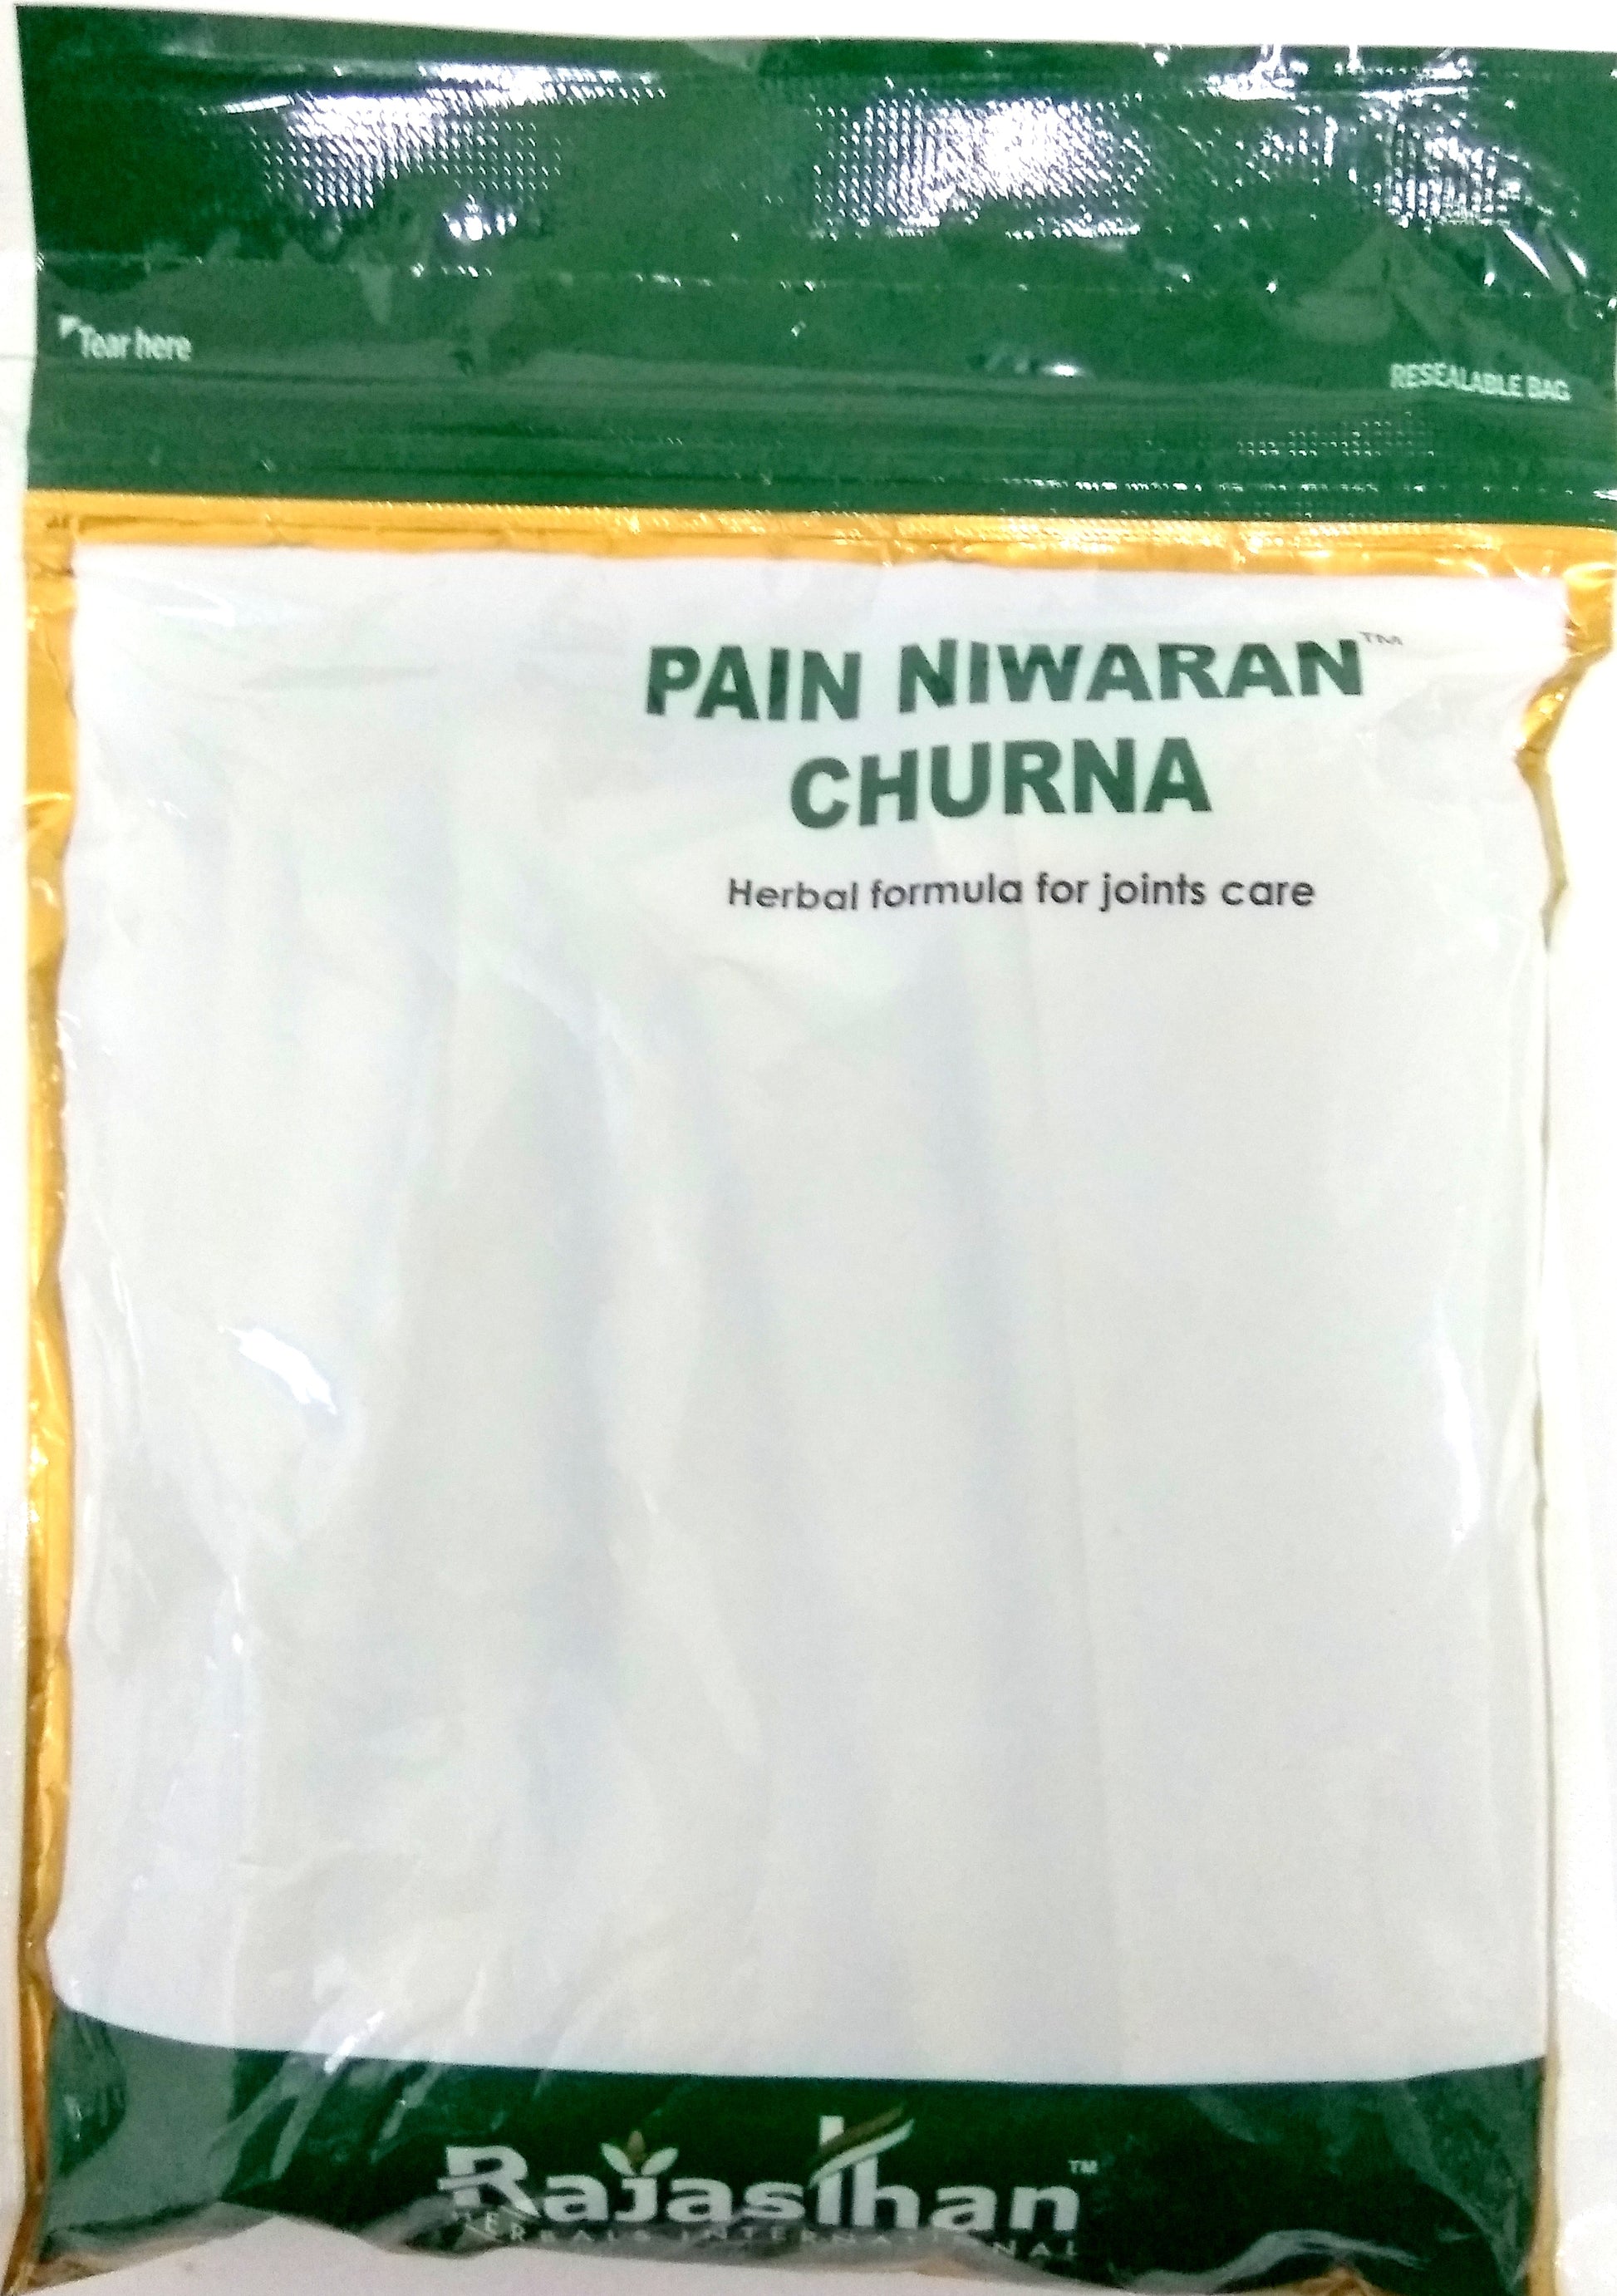 Shop Rajasthan Herbals Pain Niwaran Churna 135g at price 580.00 from Rajasthan Herbals Online - Ayush Care